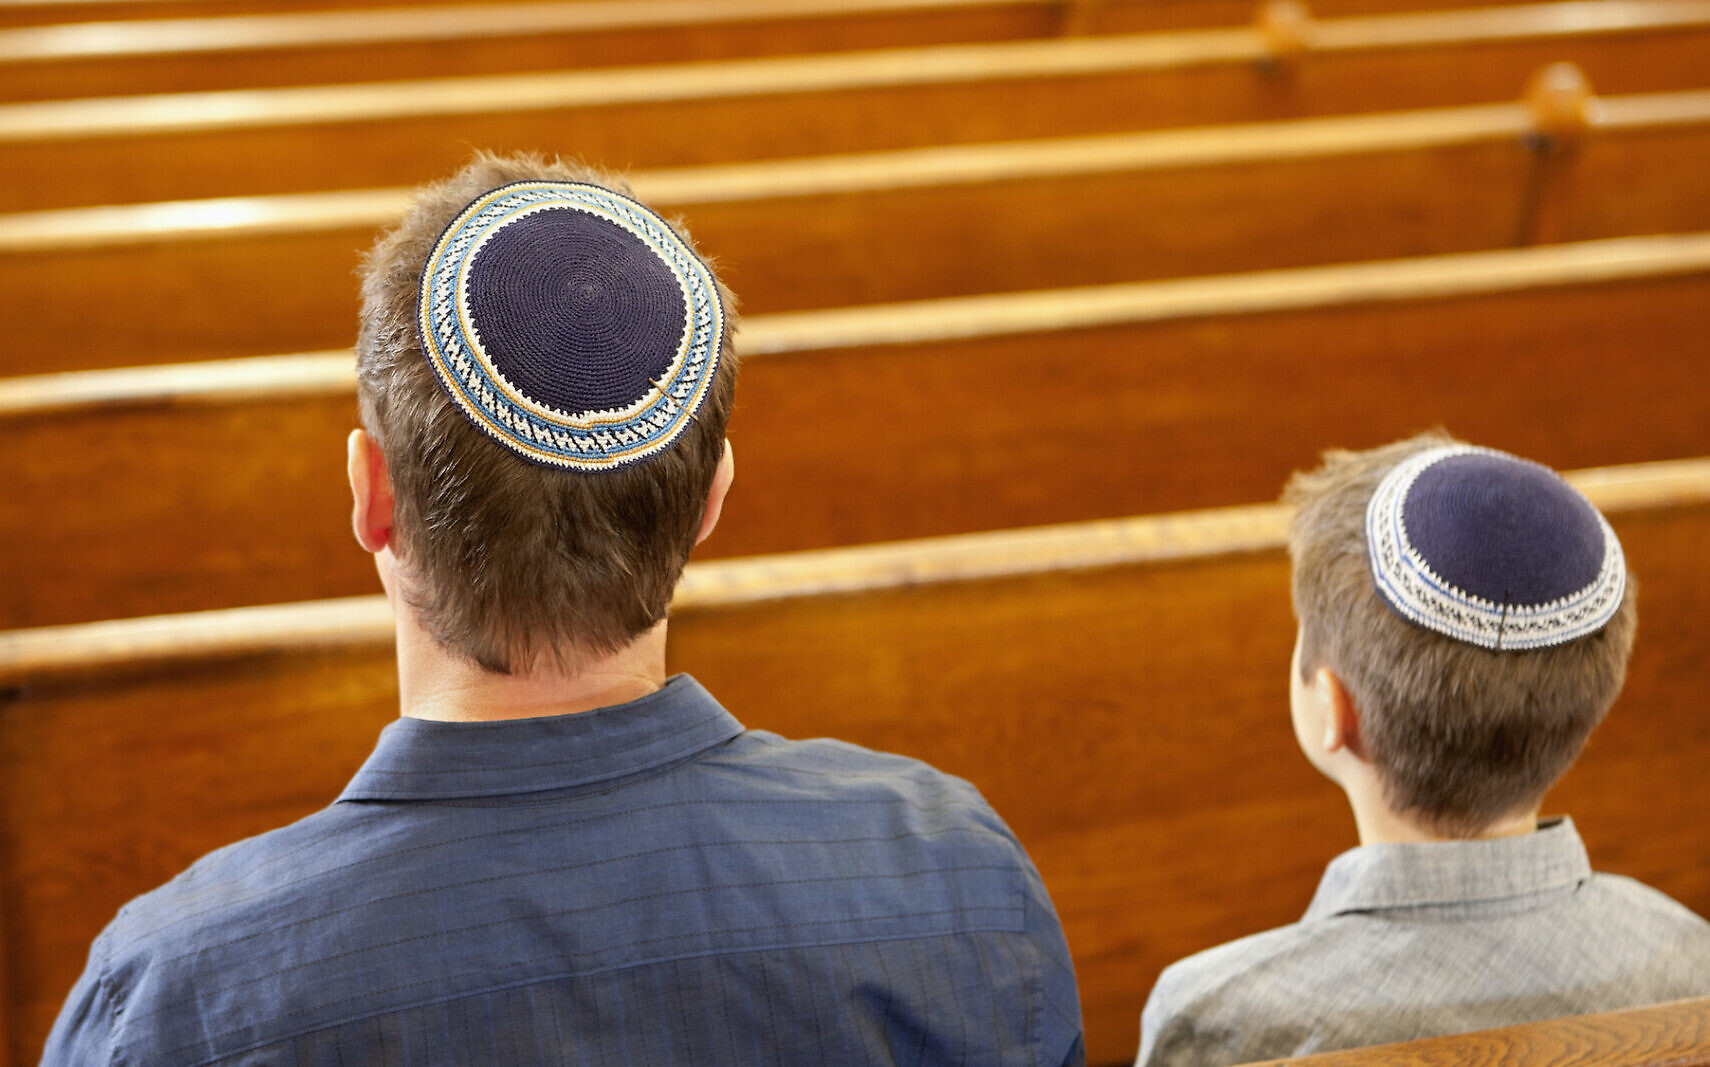 17-of-us-jews-attended-virtual-prayers-last-month-versus-half-of